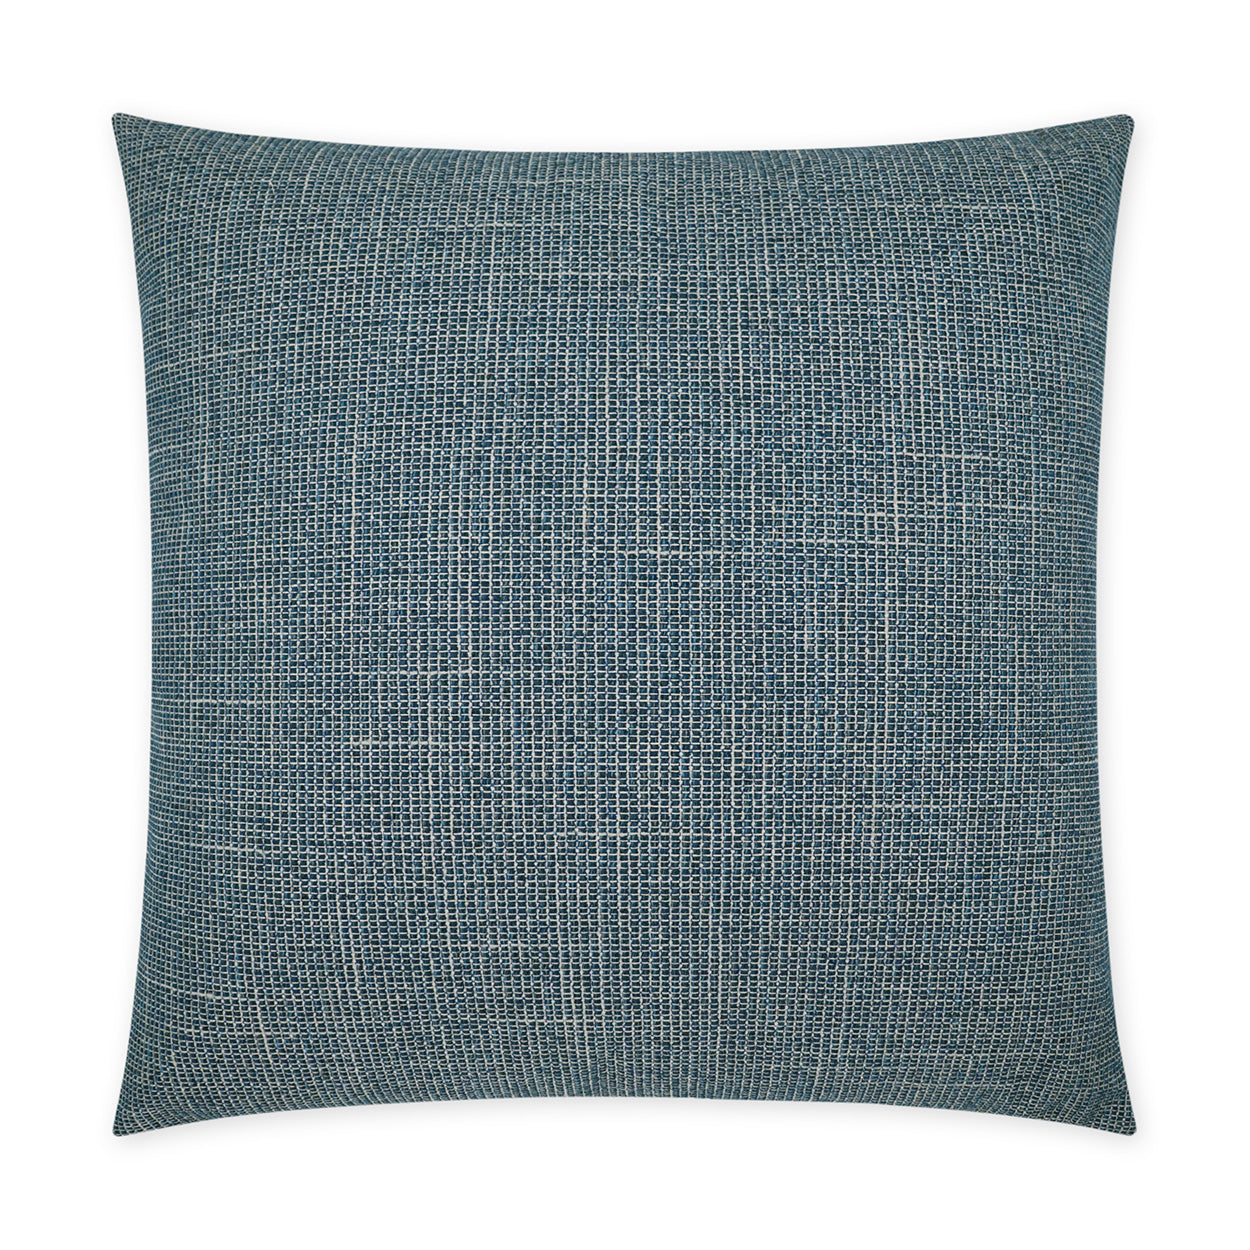 Emmorton Pillow - Blue